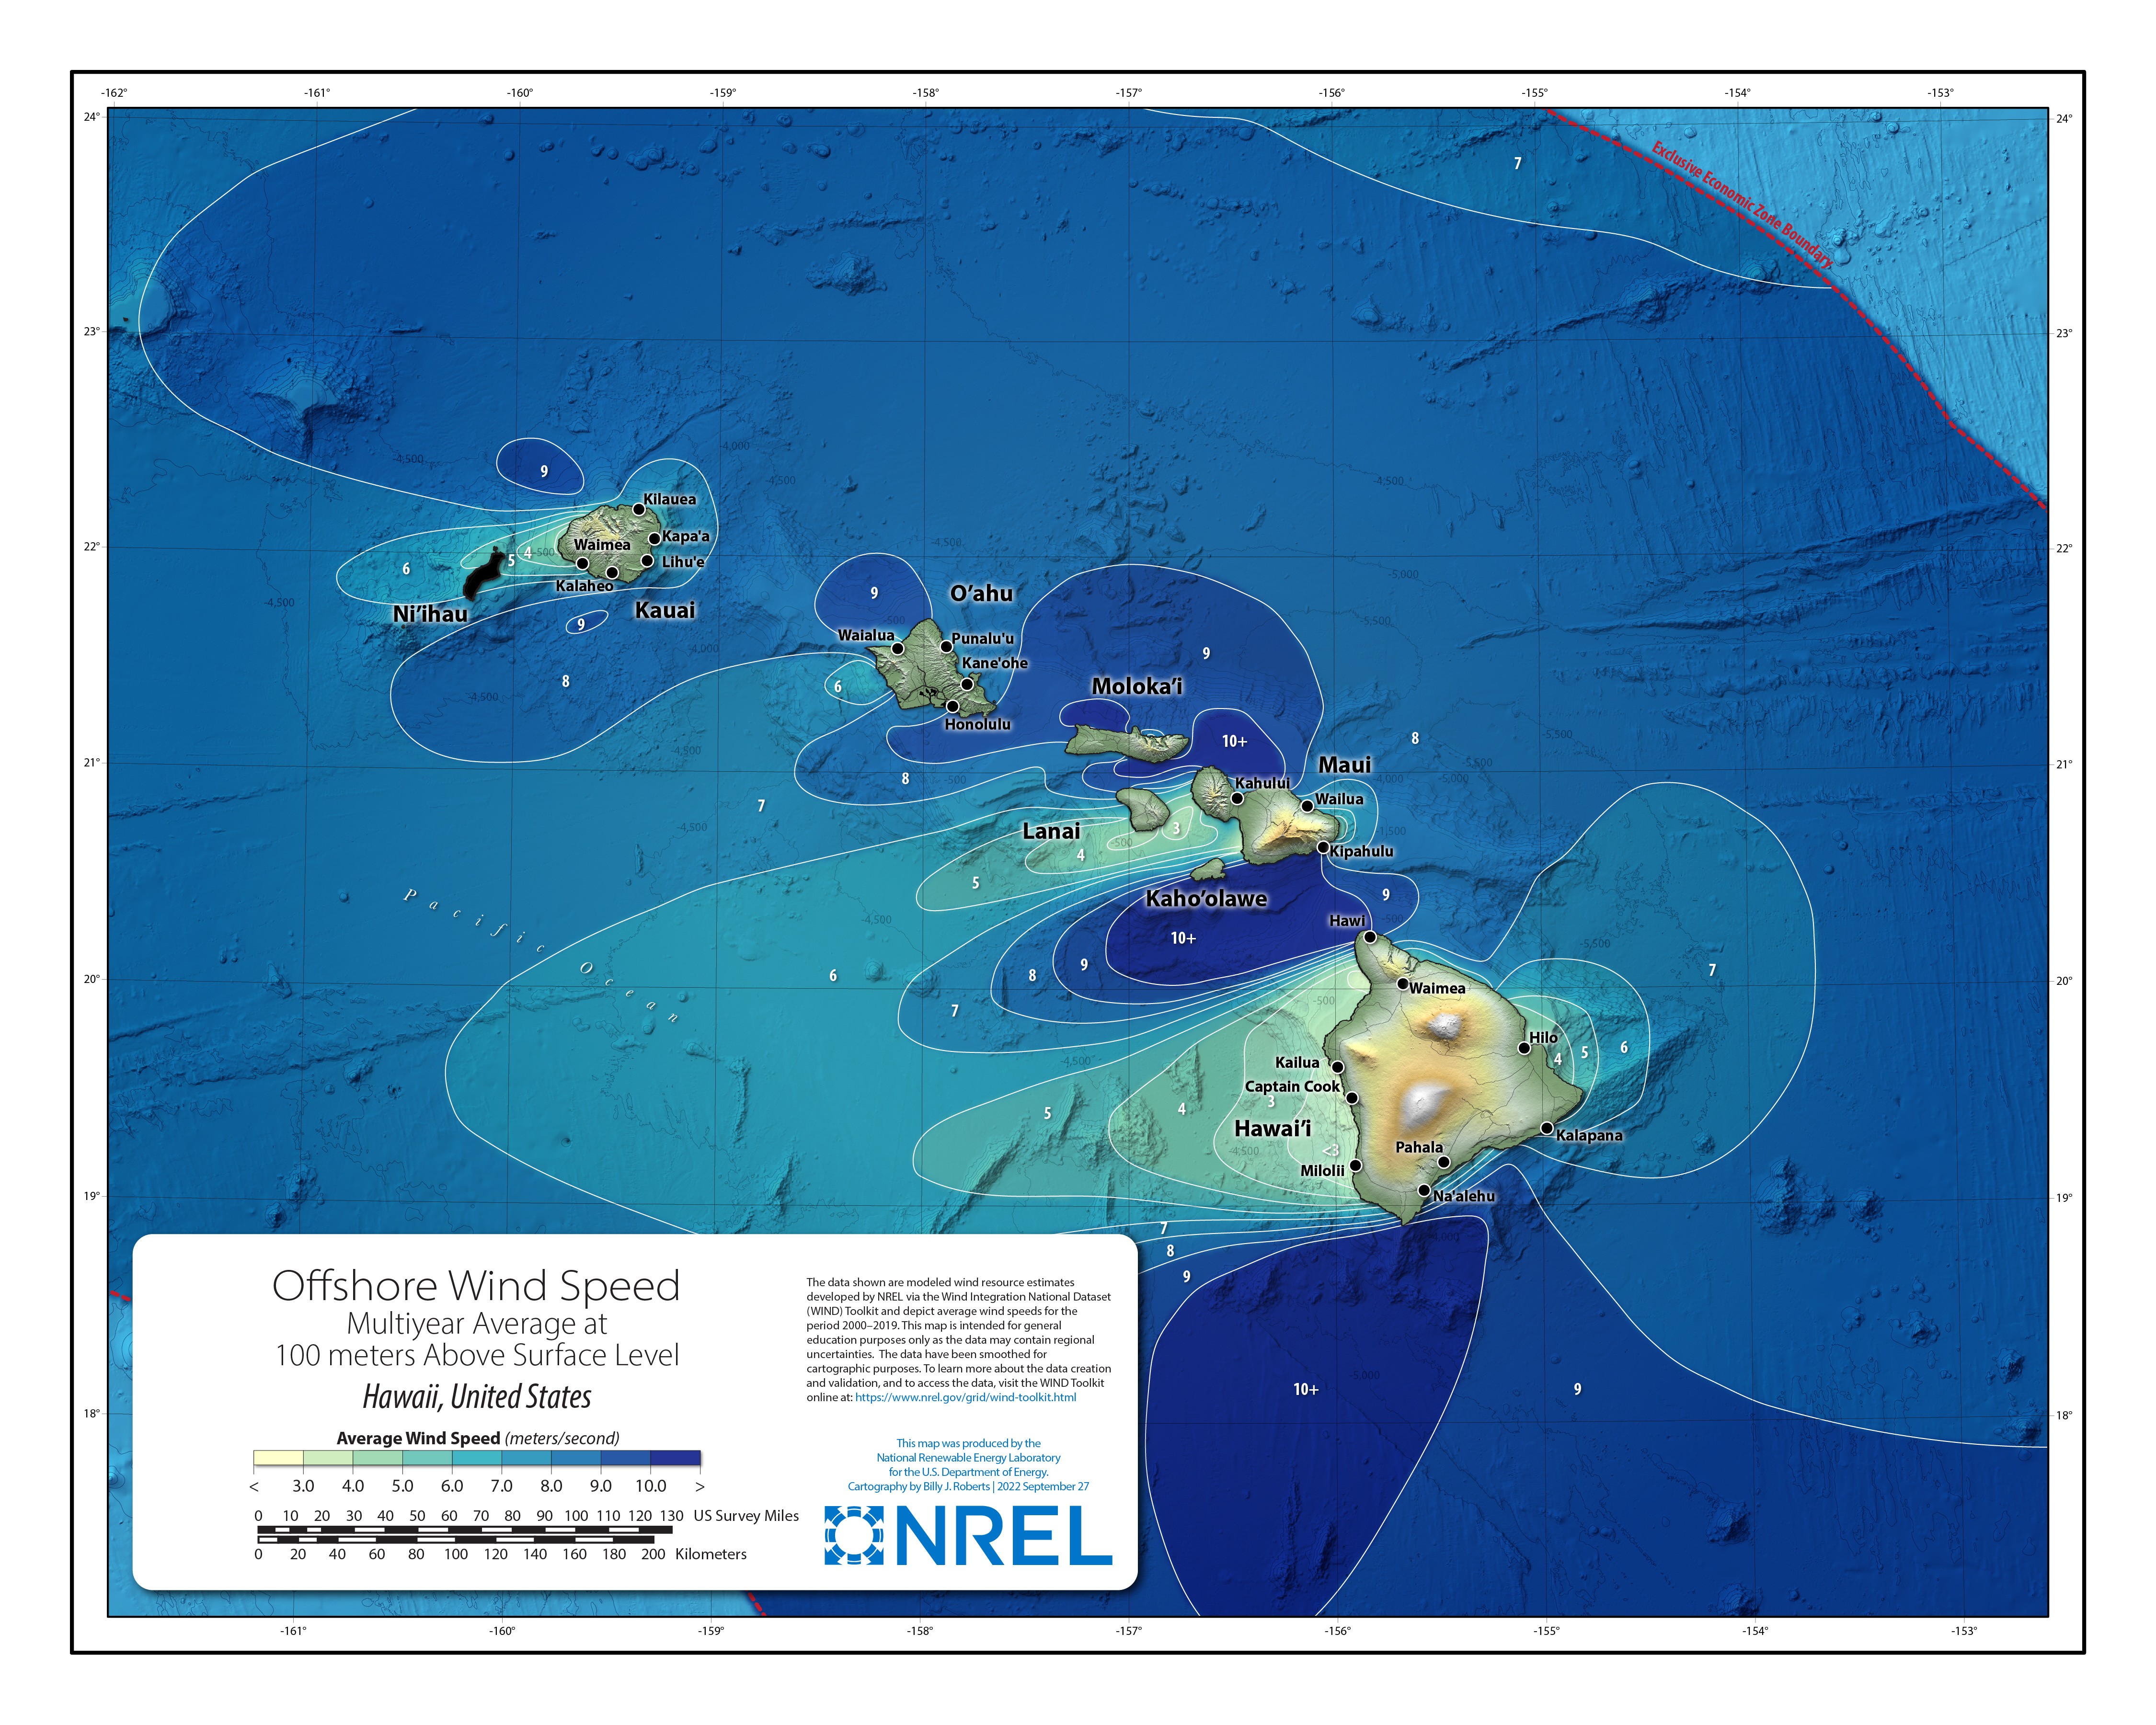 Hawaii Offshore Wind Speed at 100 Meters